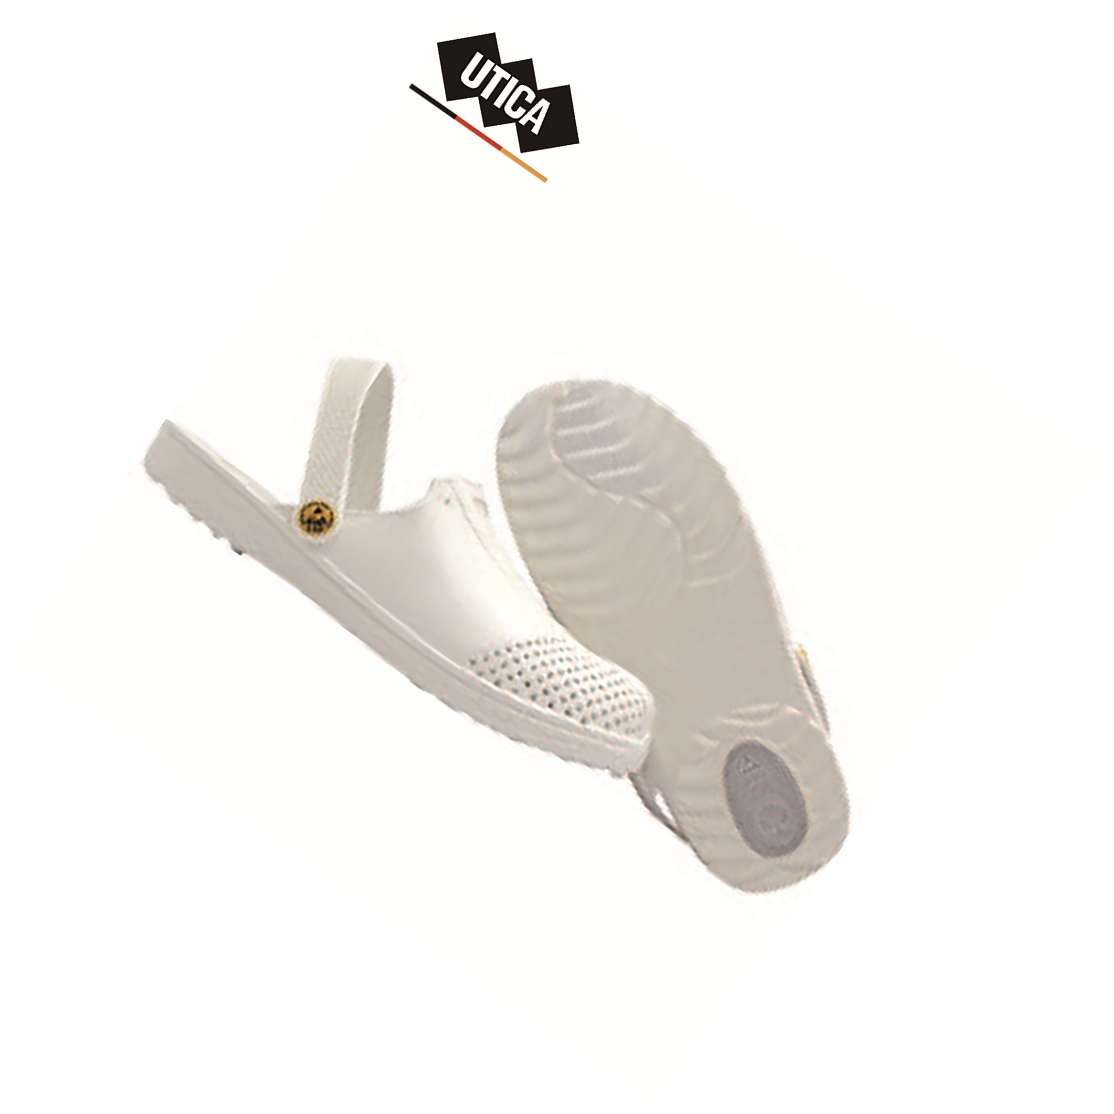 UTICA 防静电橡塑凉鞋 白色 GE80-504-284